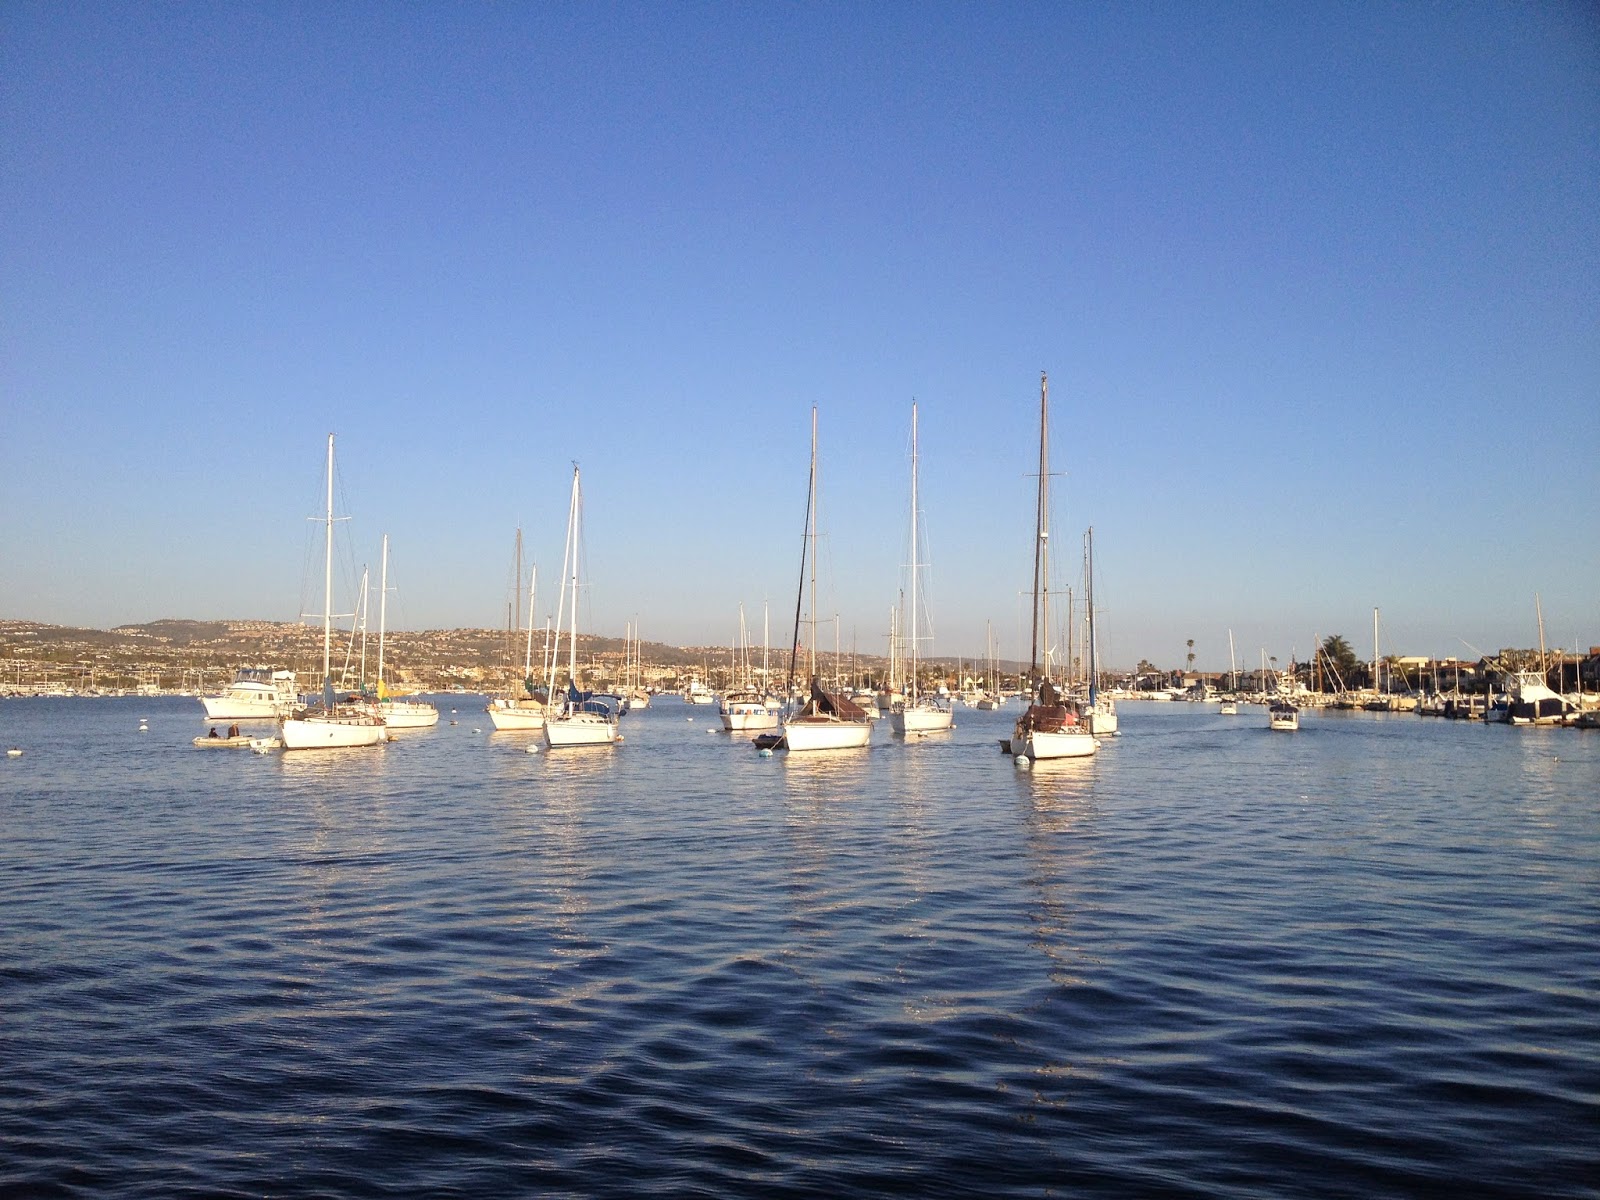 Sailboats in Balboa Harbor - Newport Beach, CA